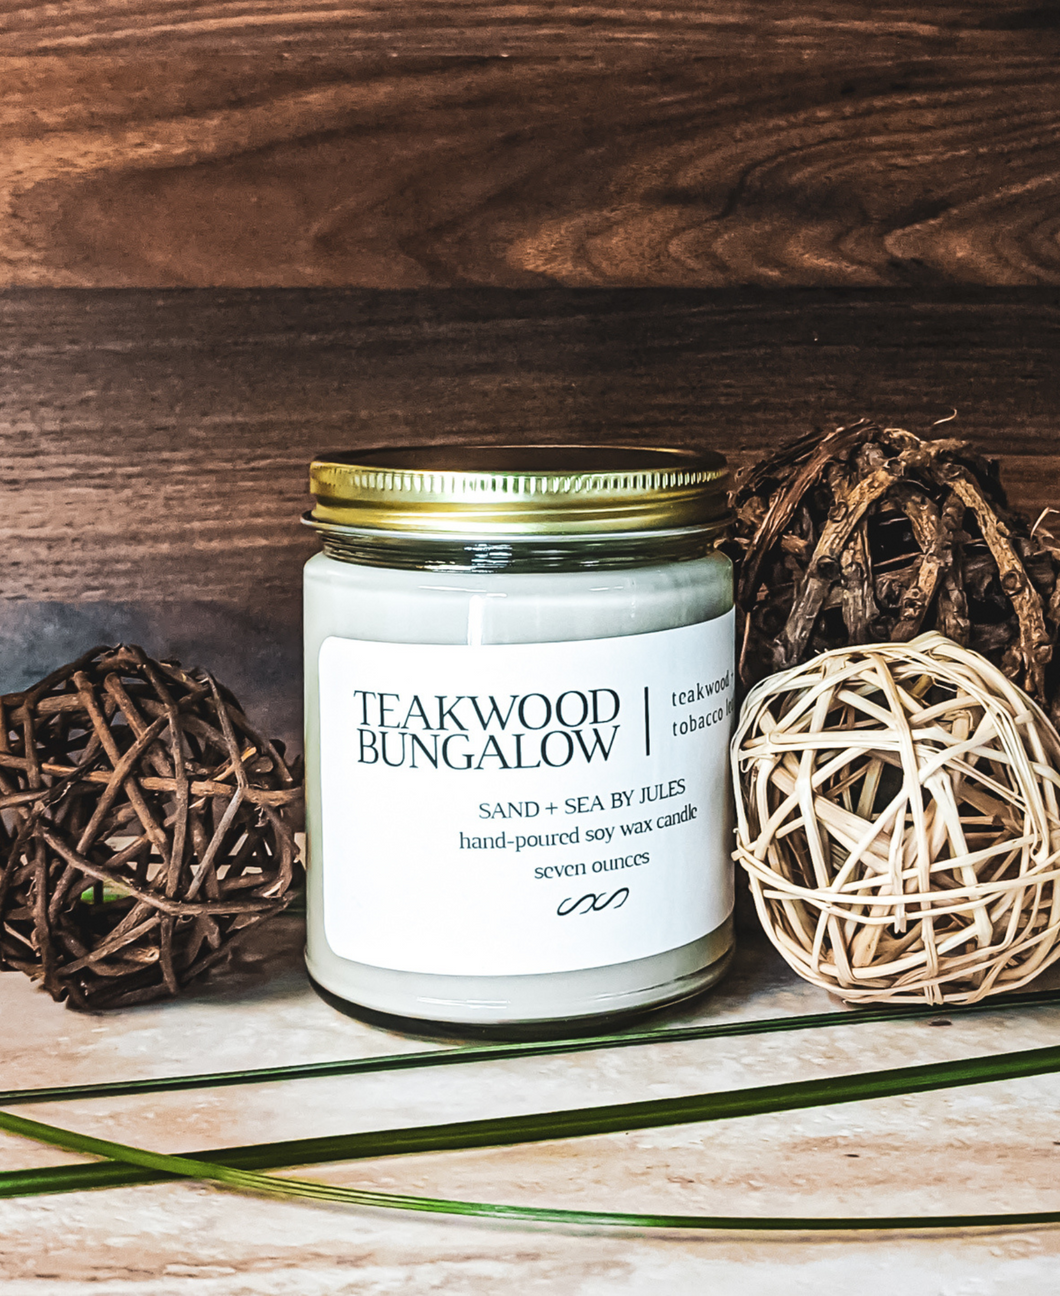 Teakwood Bungalow: Teakwood + Tobacco Leaf